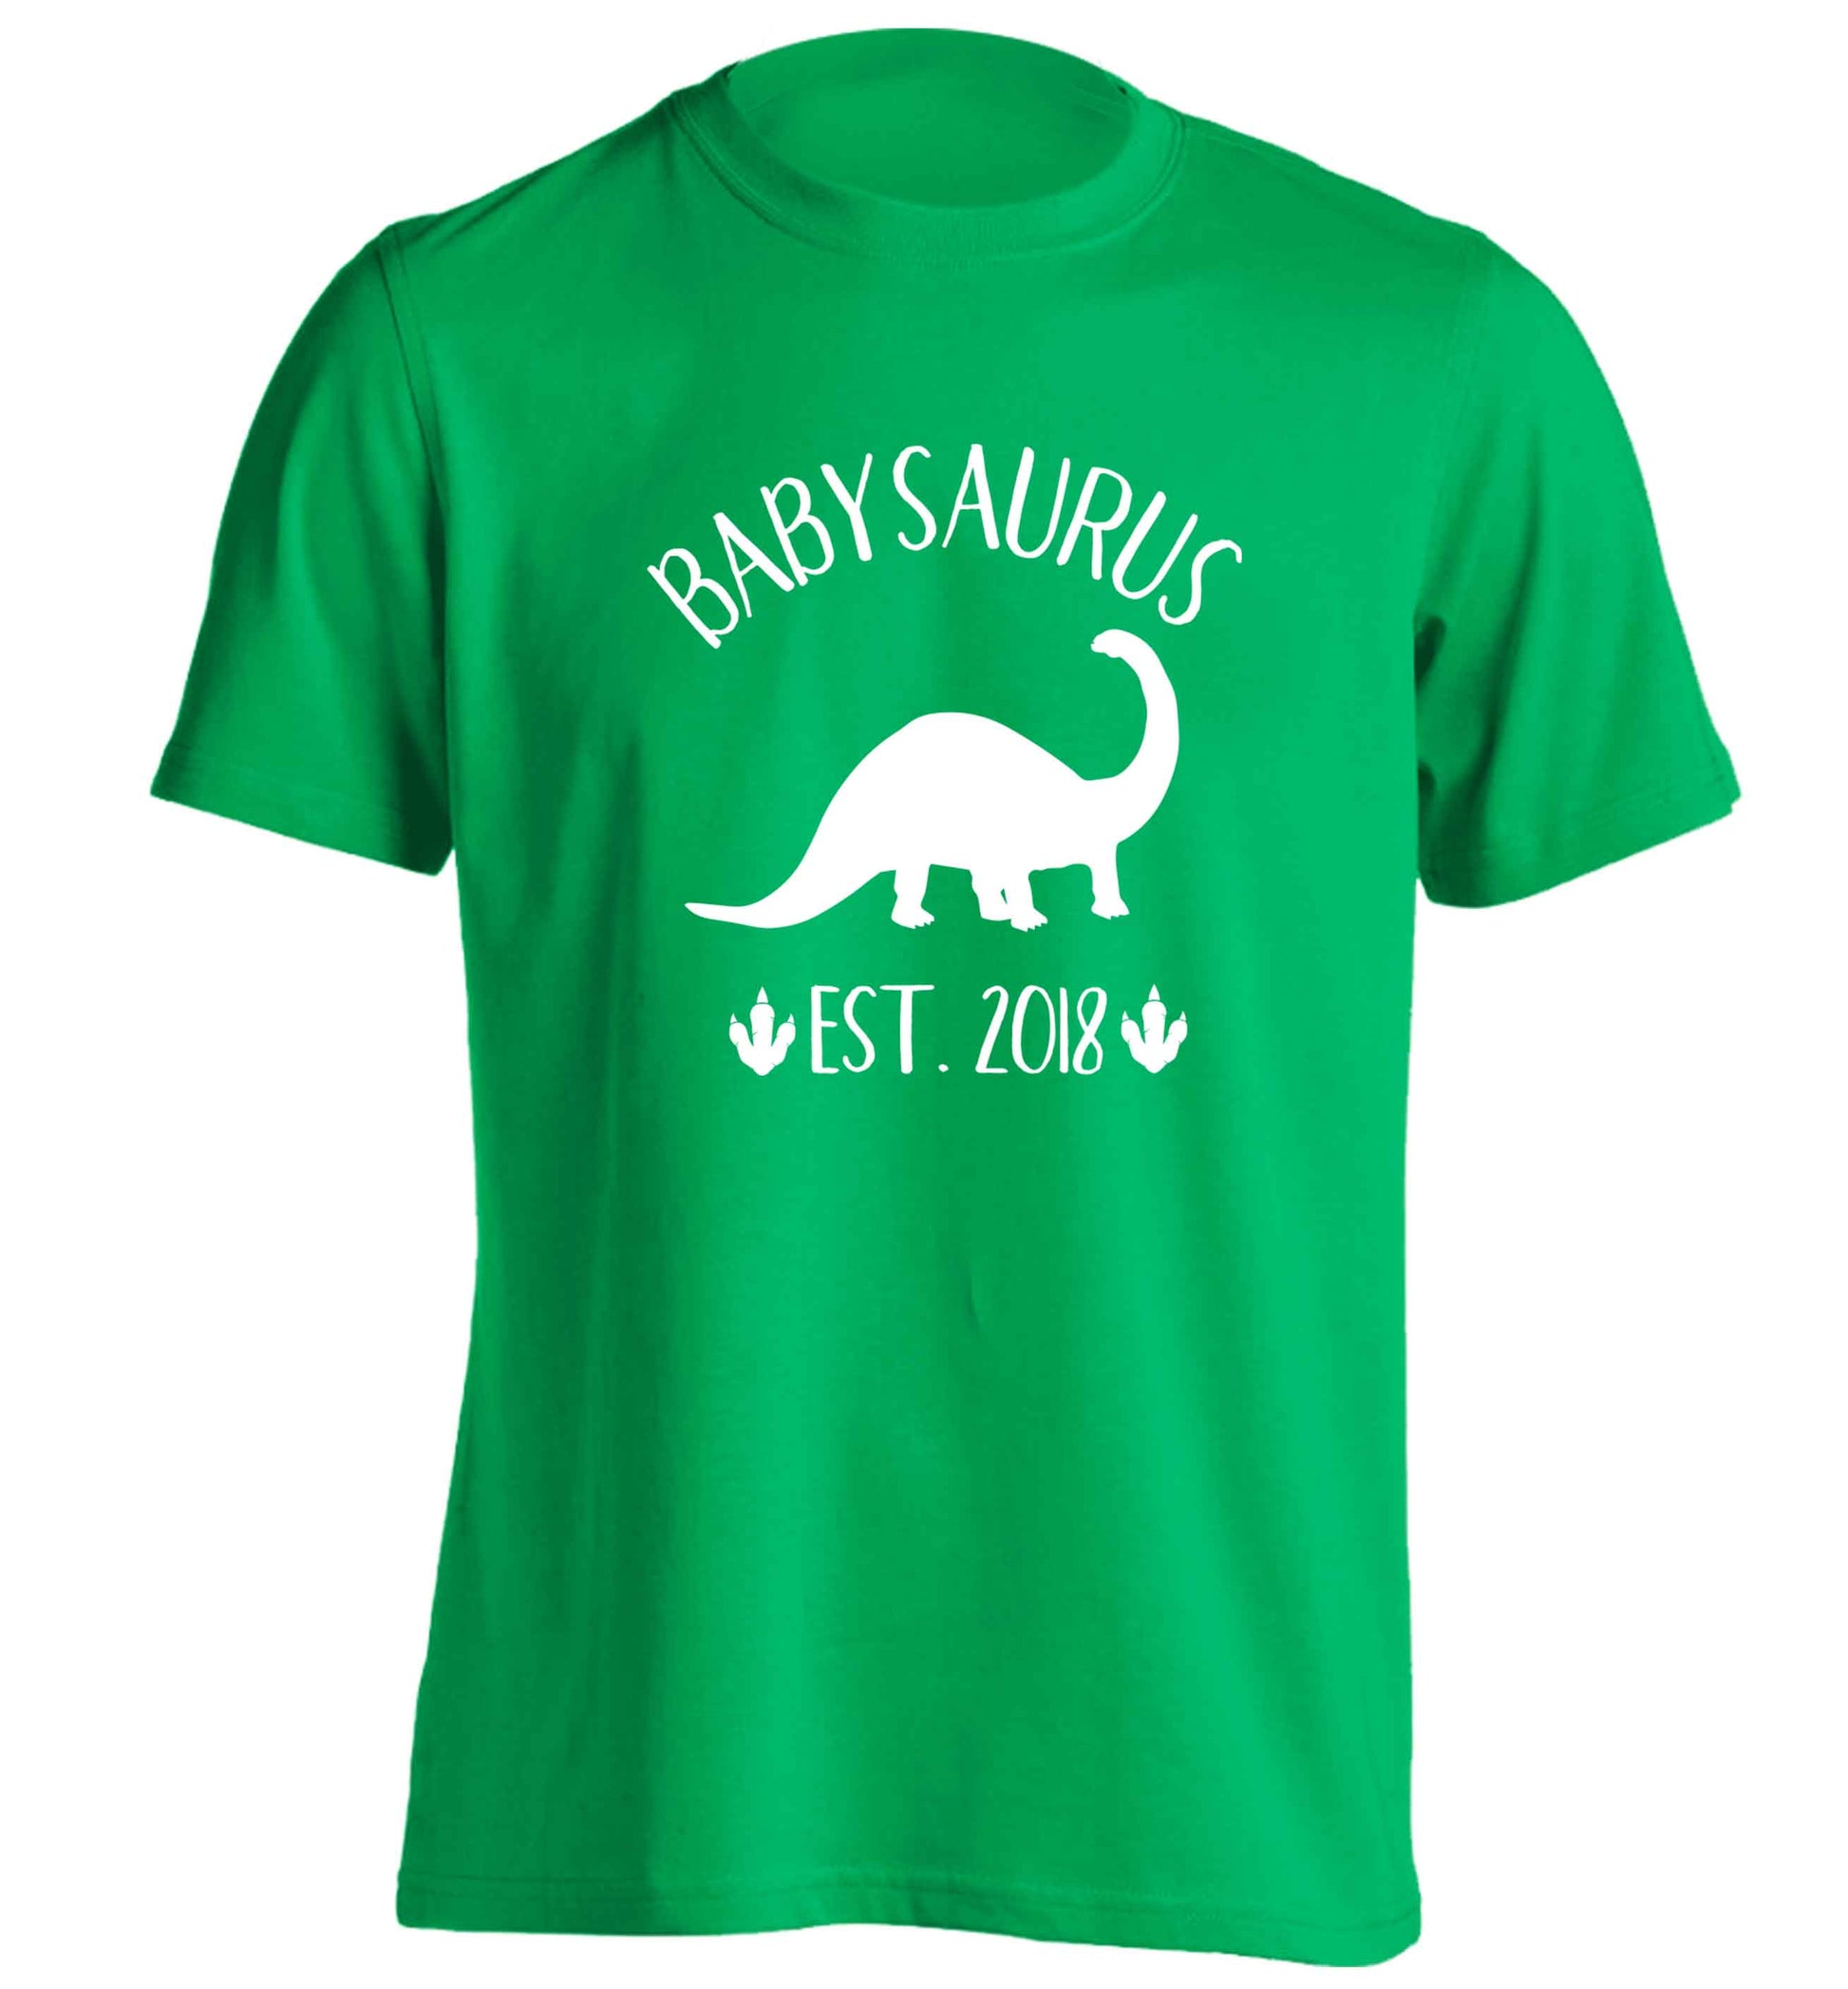 Personalised babysaurus since (custom date) adults unisex green Tshirt 2XL